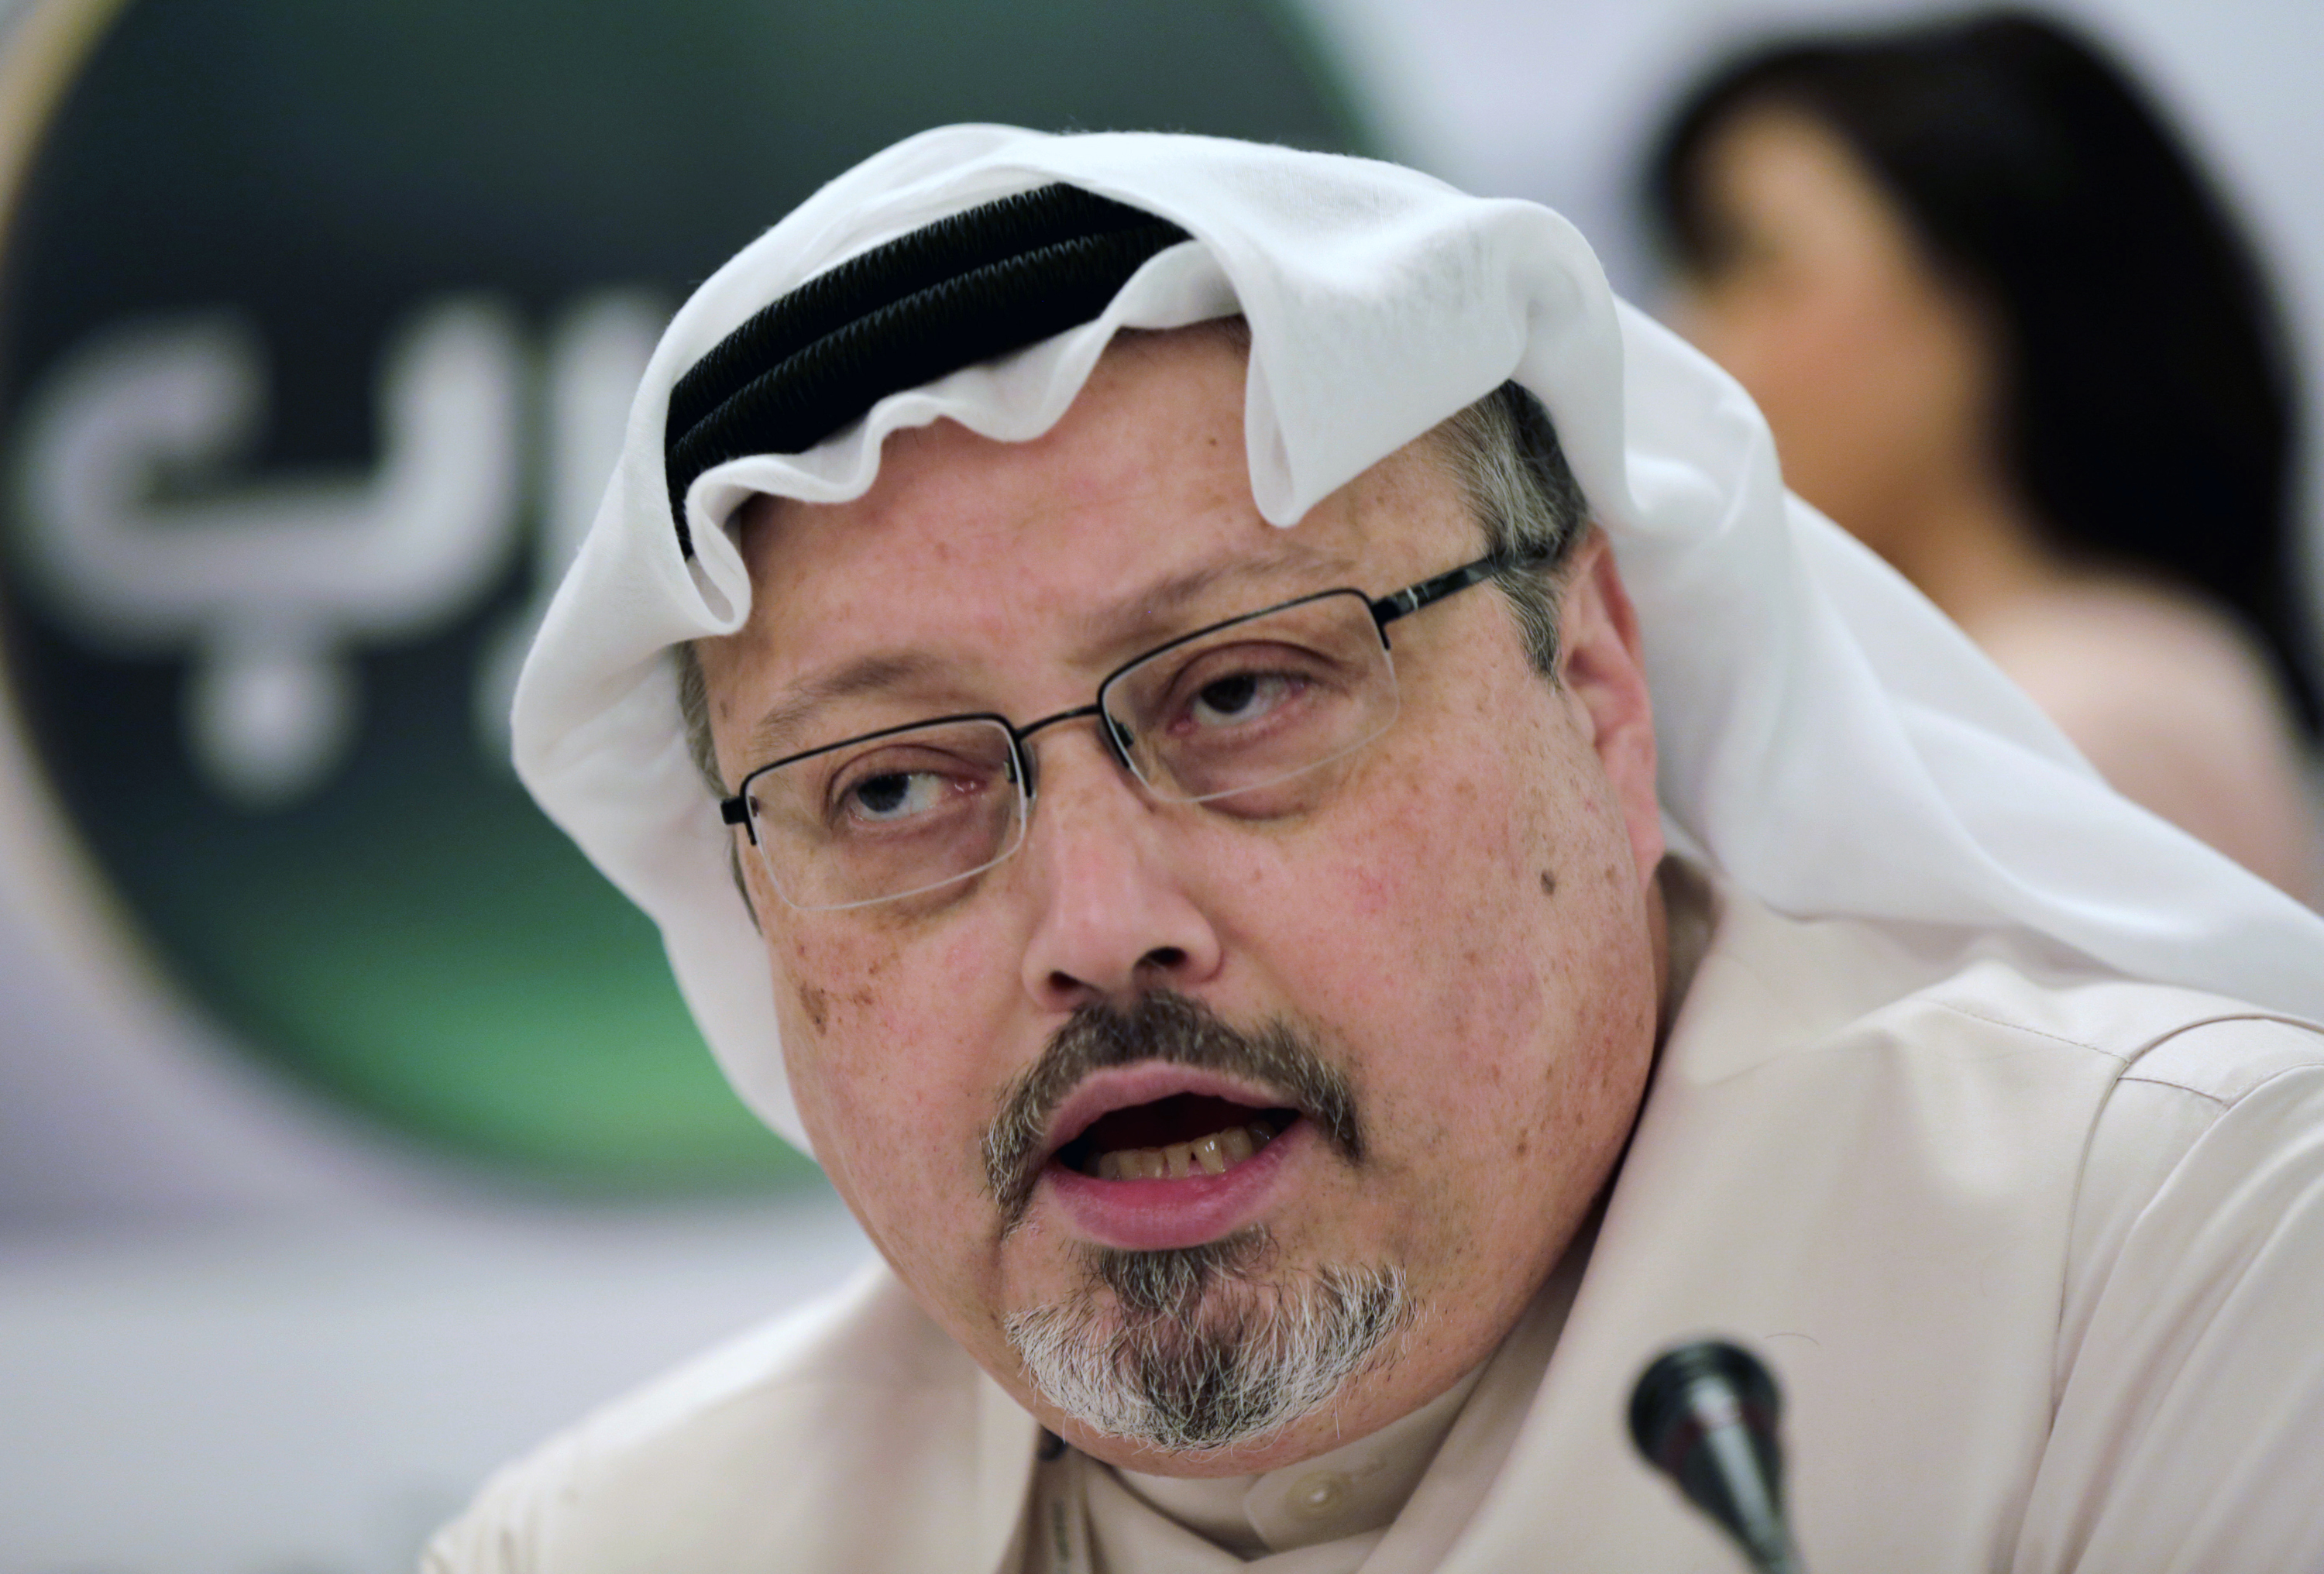 Saudis don't know where Khashoggi's body is – foreign minister